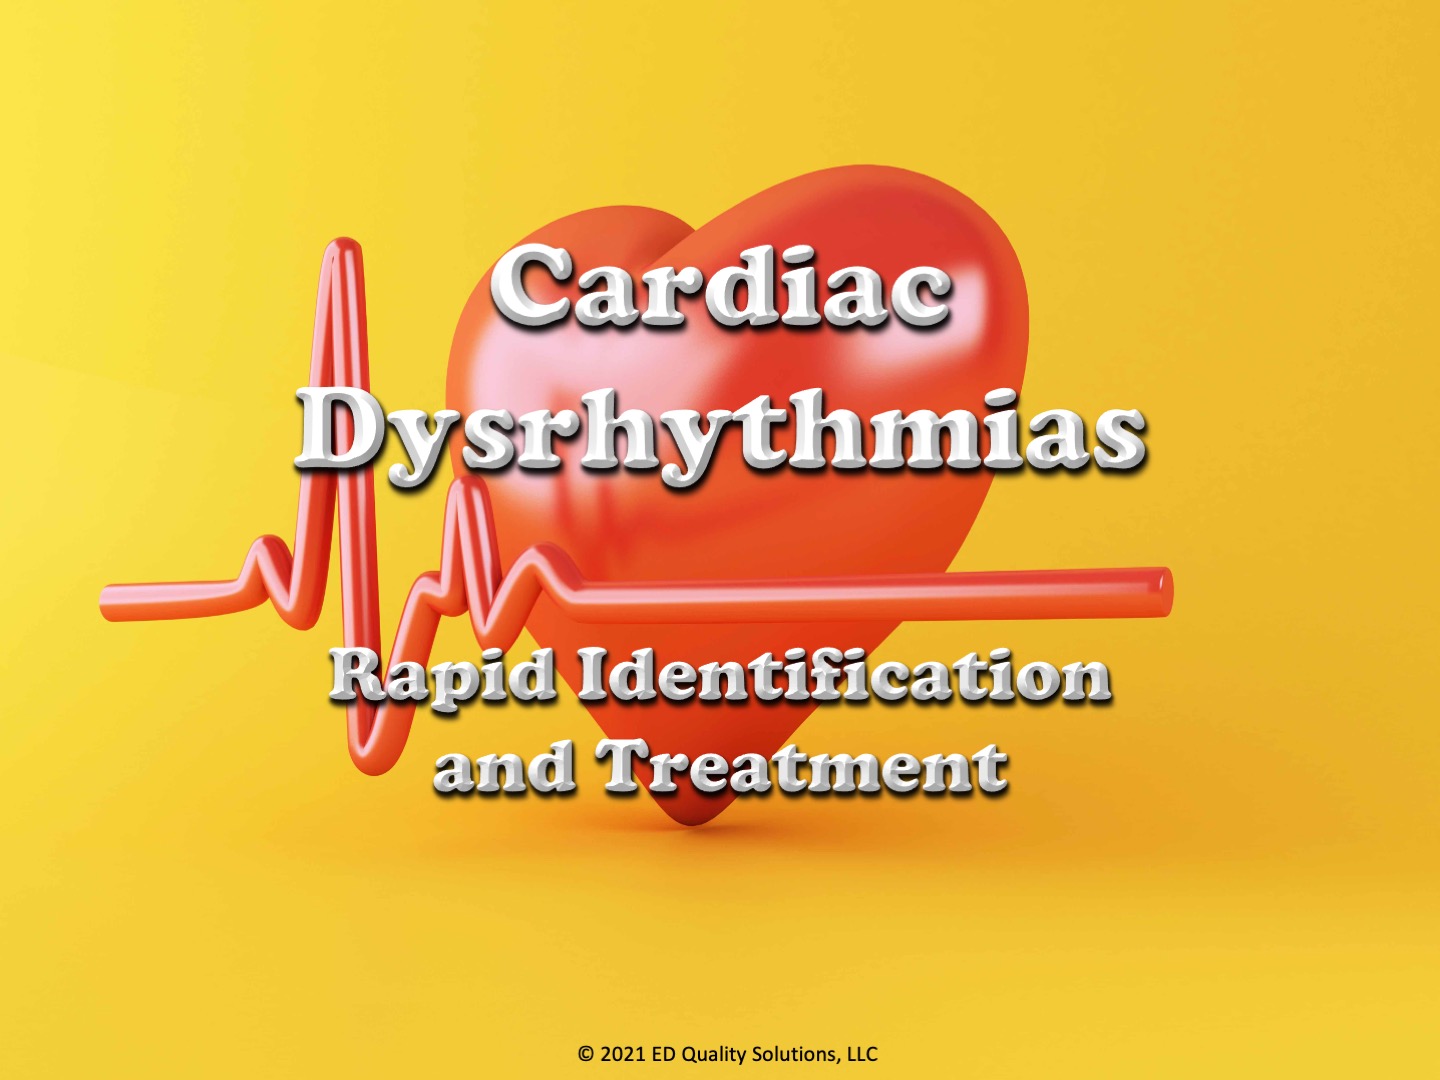 Cardiac Dysrhythmias - Rapid Identification and Treatment